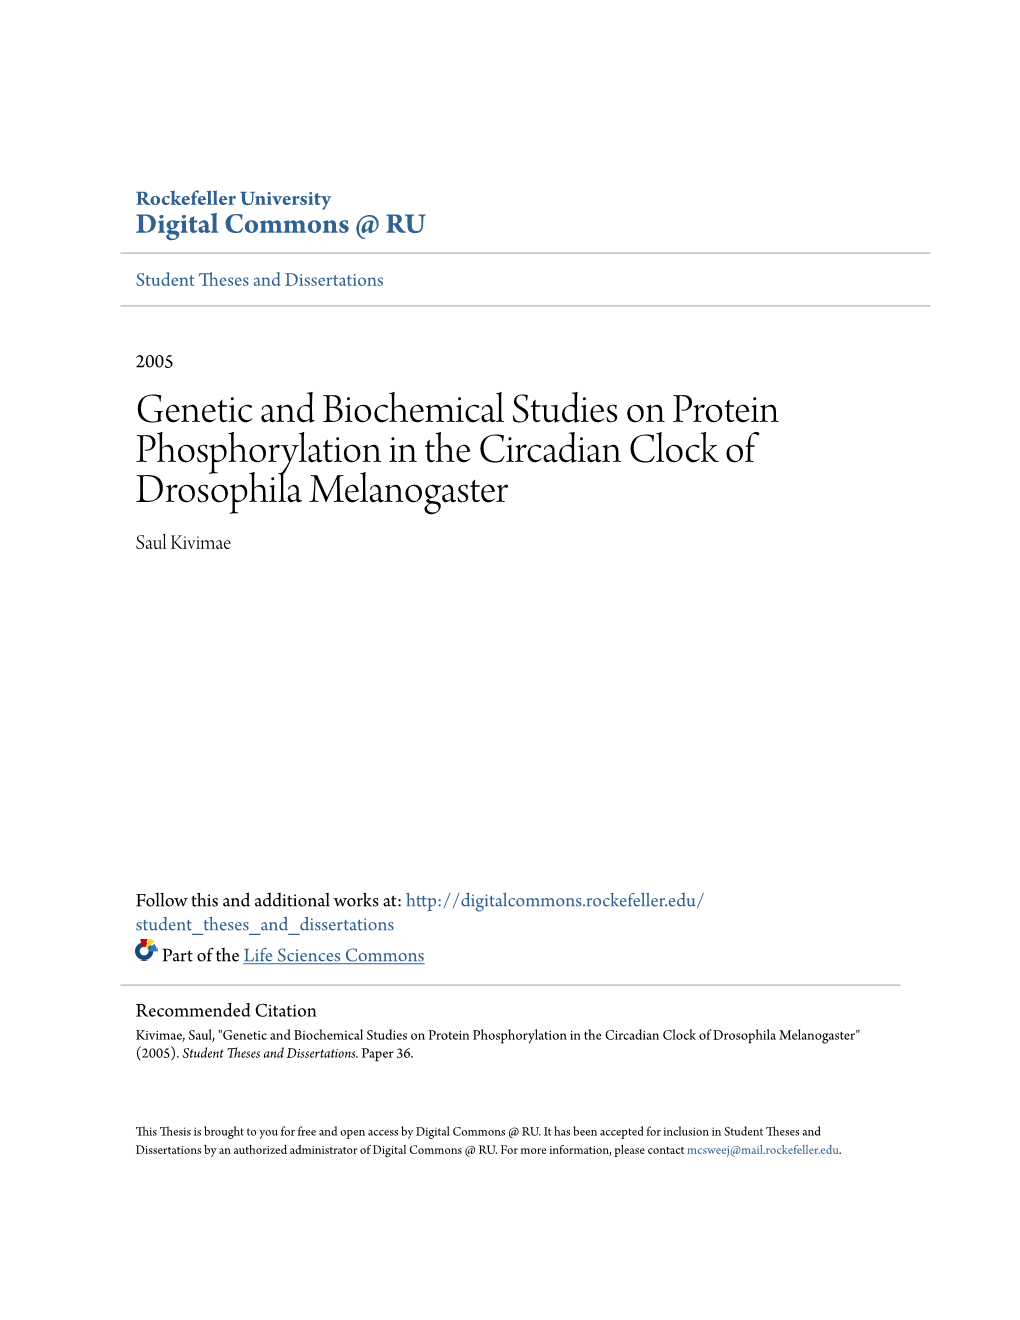 Genetic and Biochemical Studies on Protein Phosphorylation in the Circadian Clock of Drosophila Melanogaster Saul Kivimae